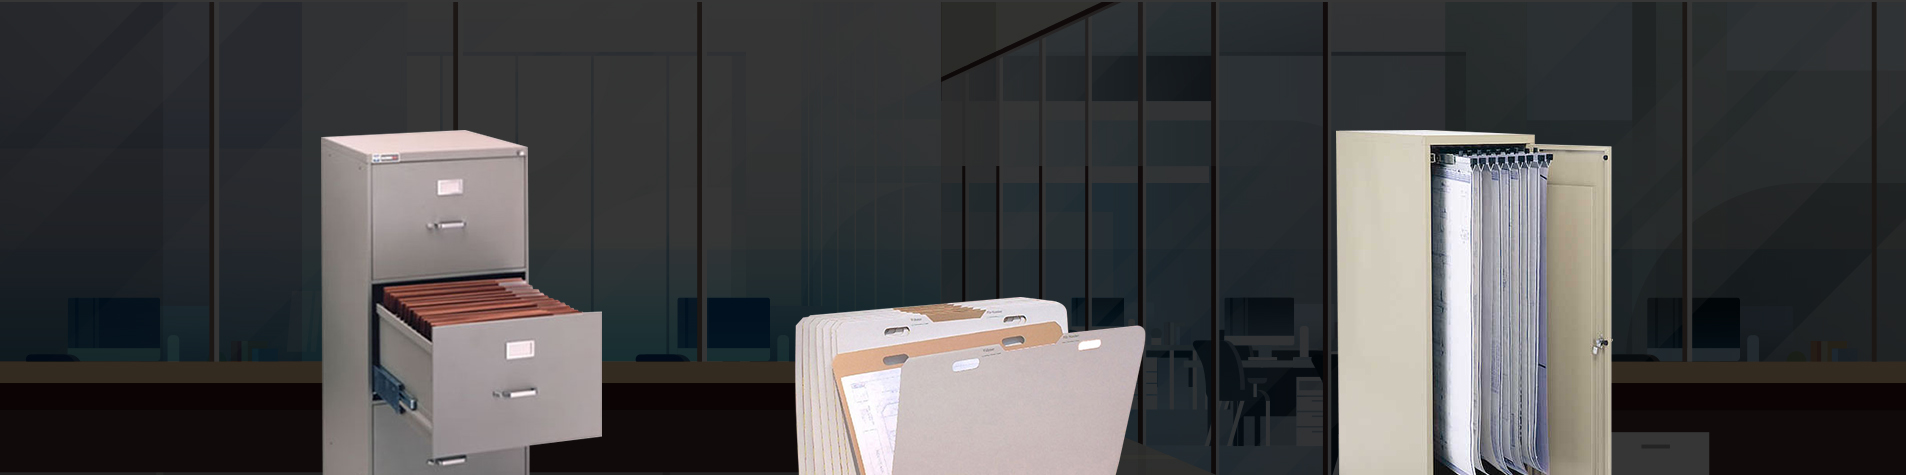 LOHONER Blueprint Storage Cabinet, Wooden Mobile Blueprint Holder for Roll  File, Construction Plan Holder for Office, 30 Slots